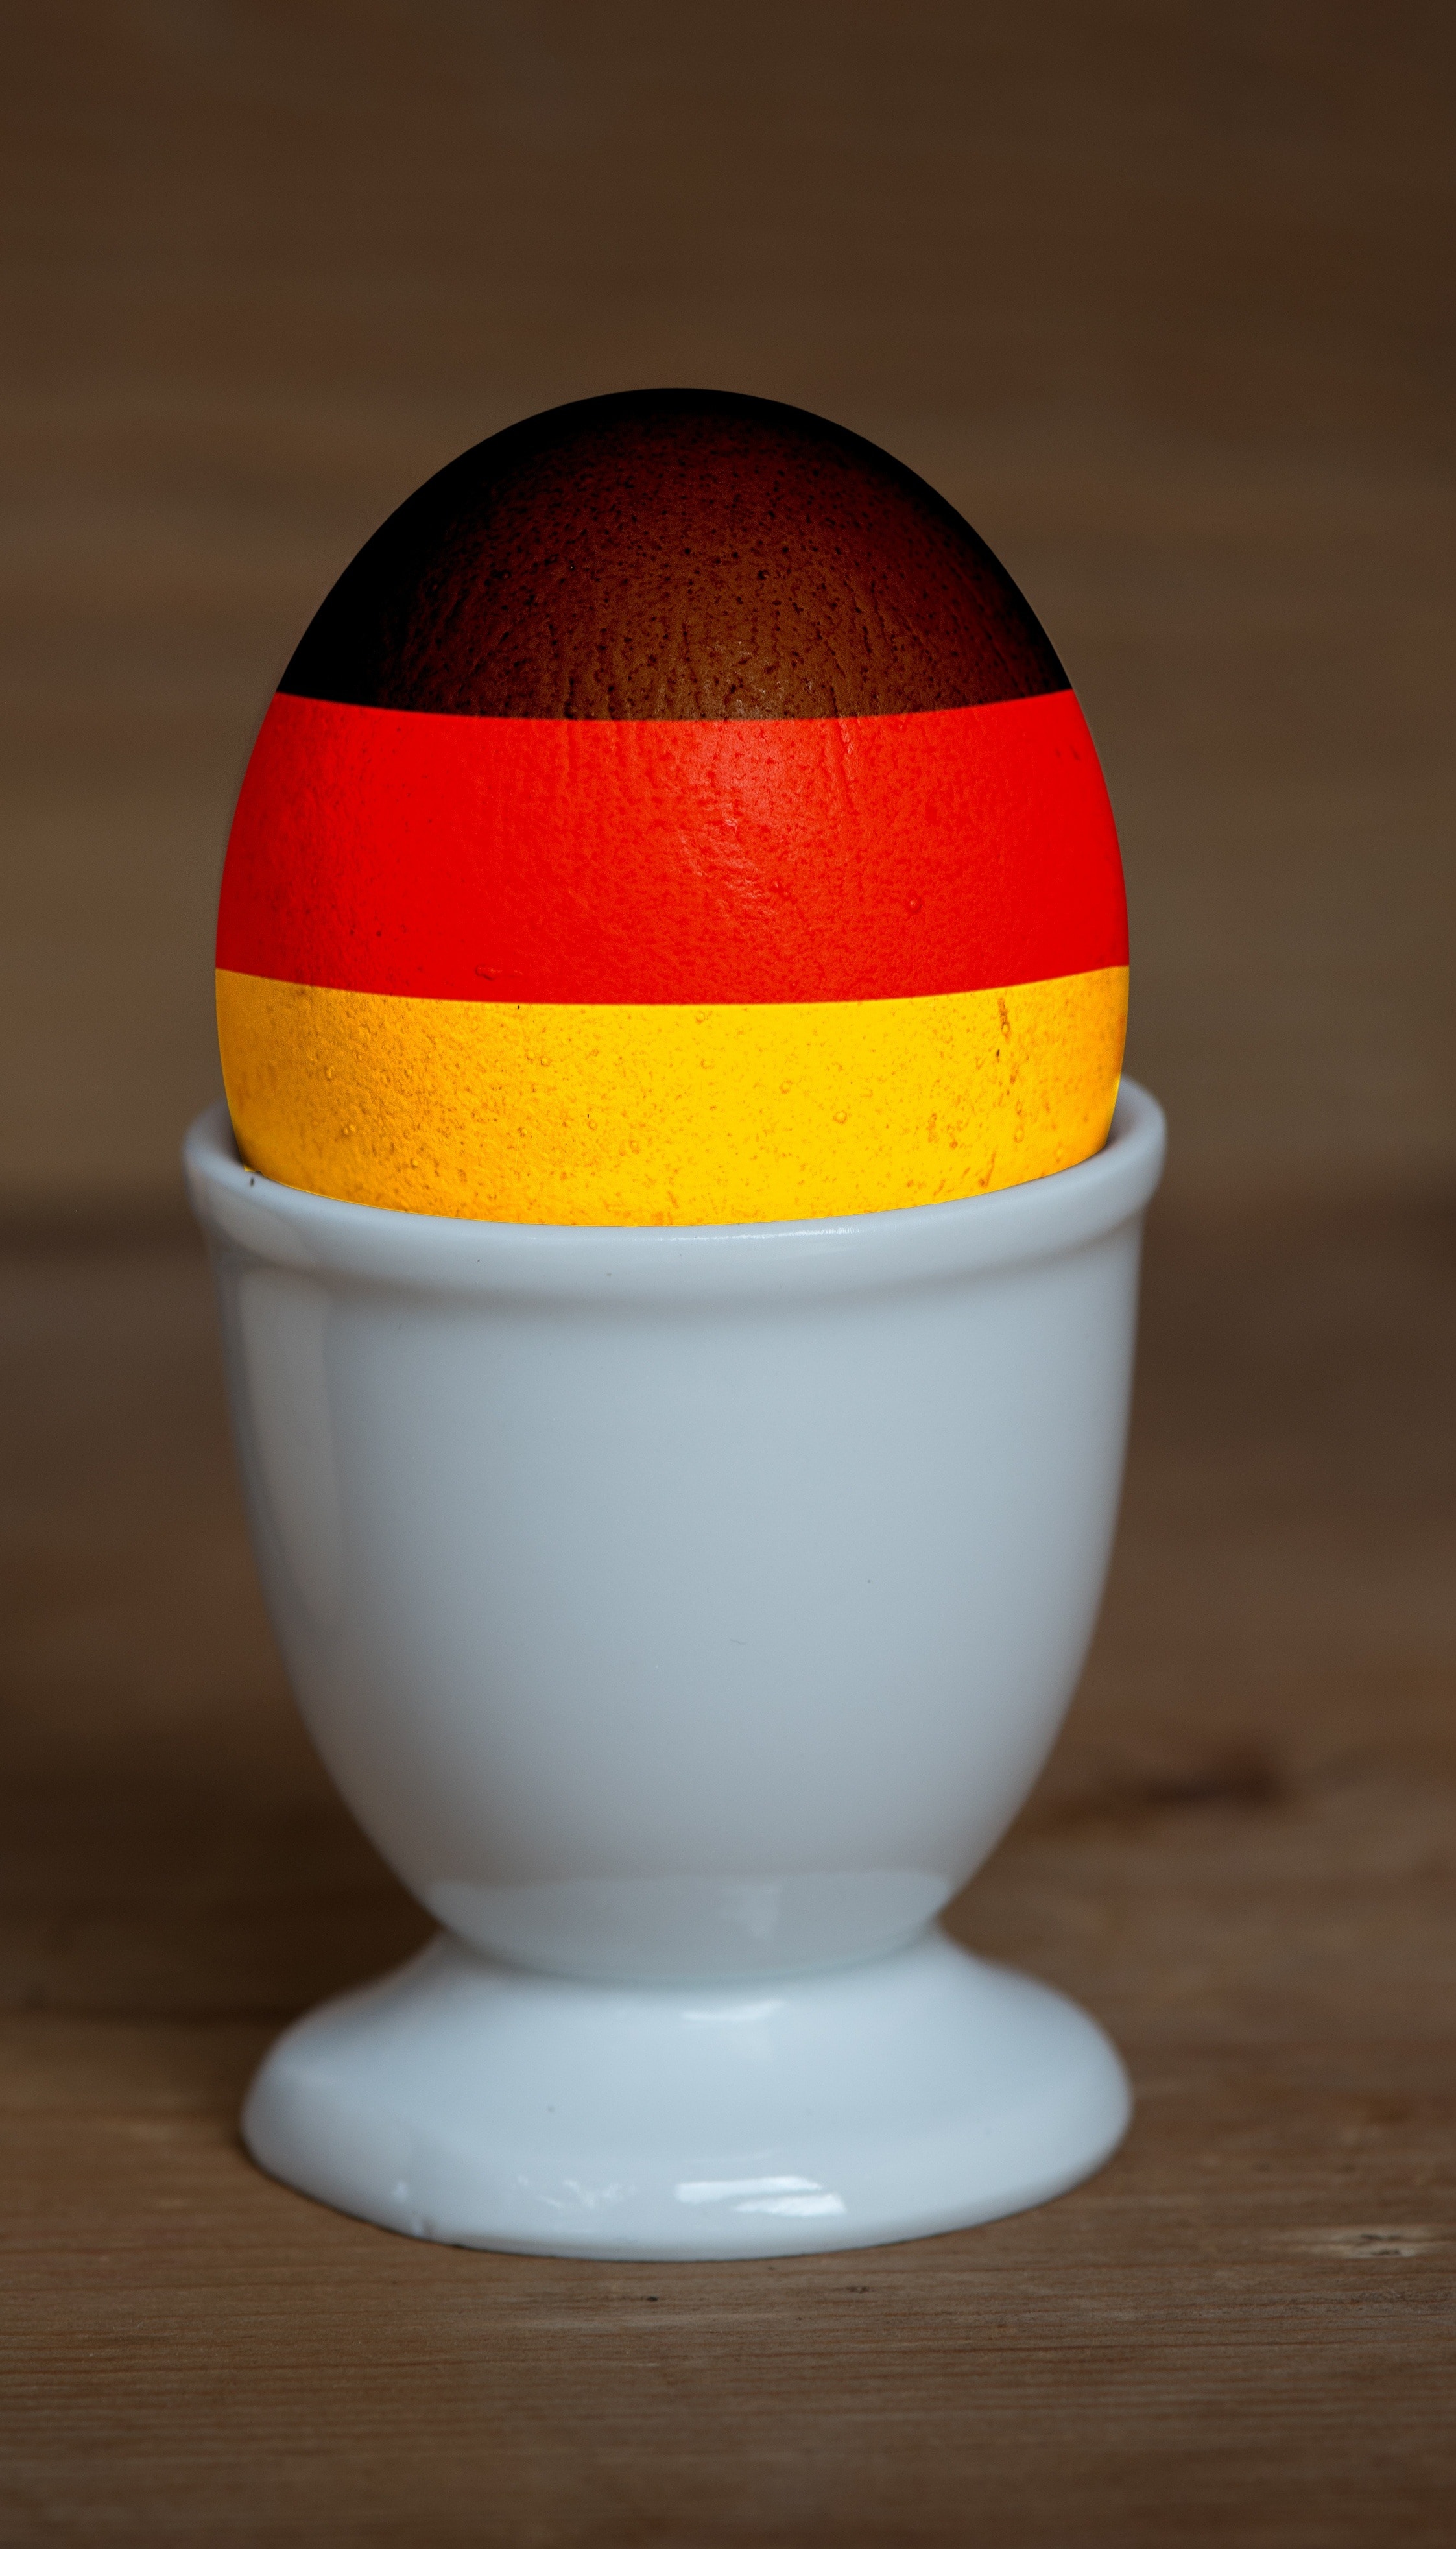 Iman, Egg, Germany, Em, Photoshop, egg, ball